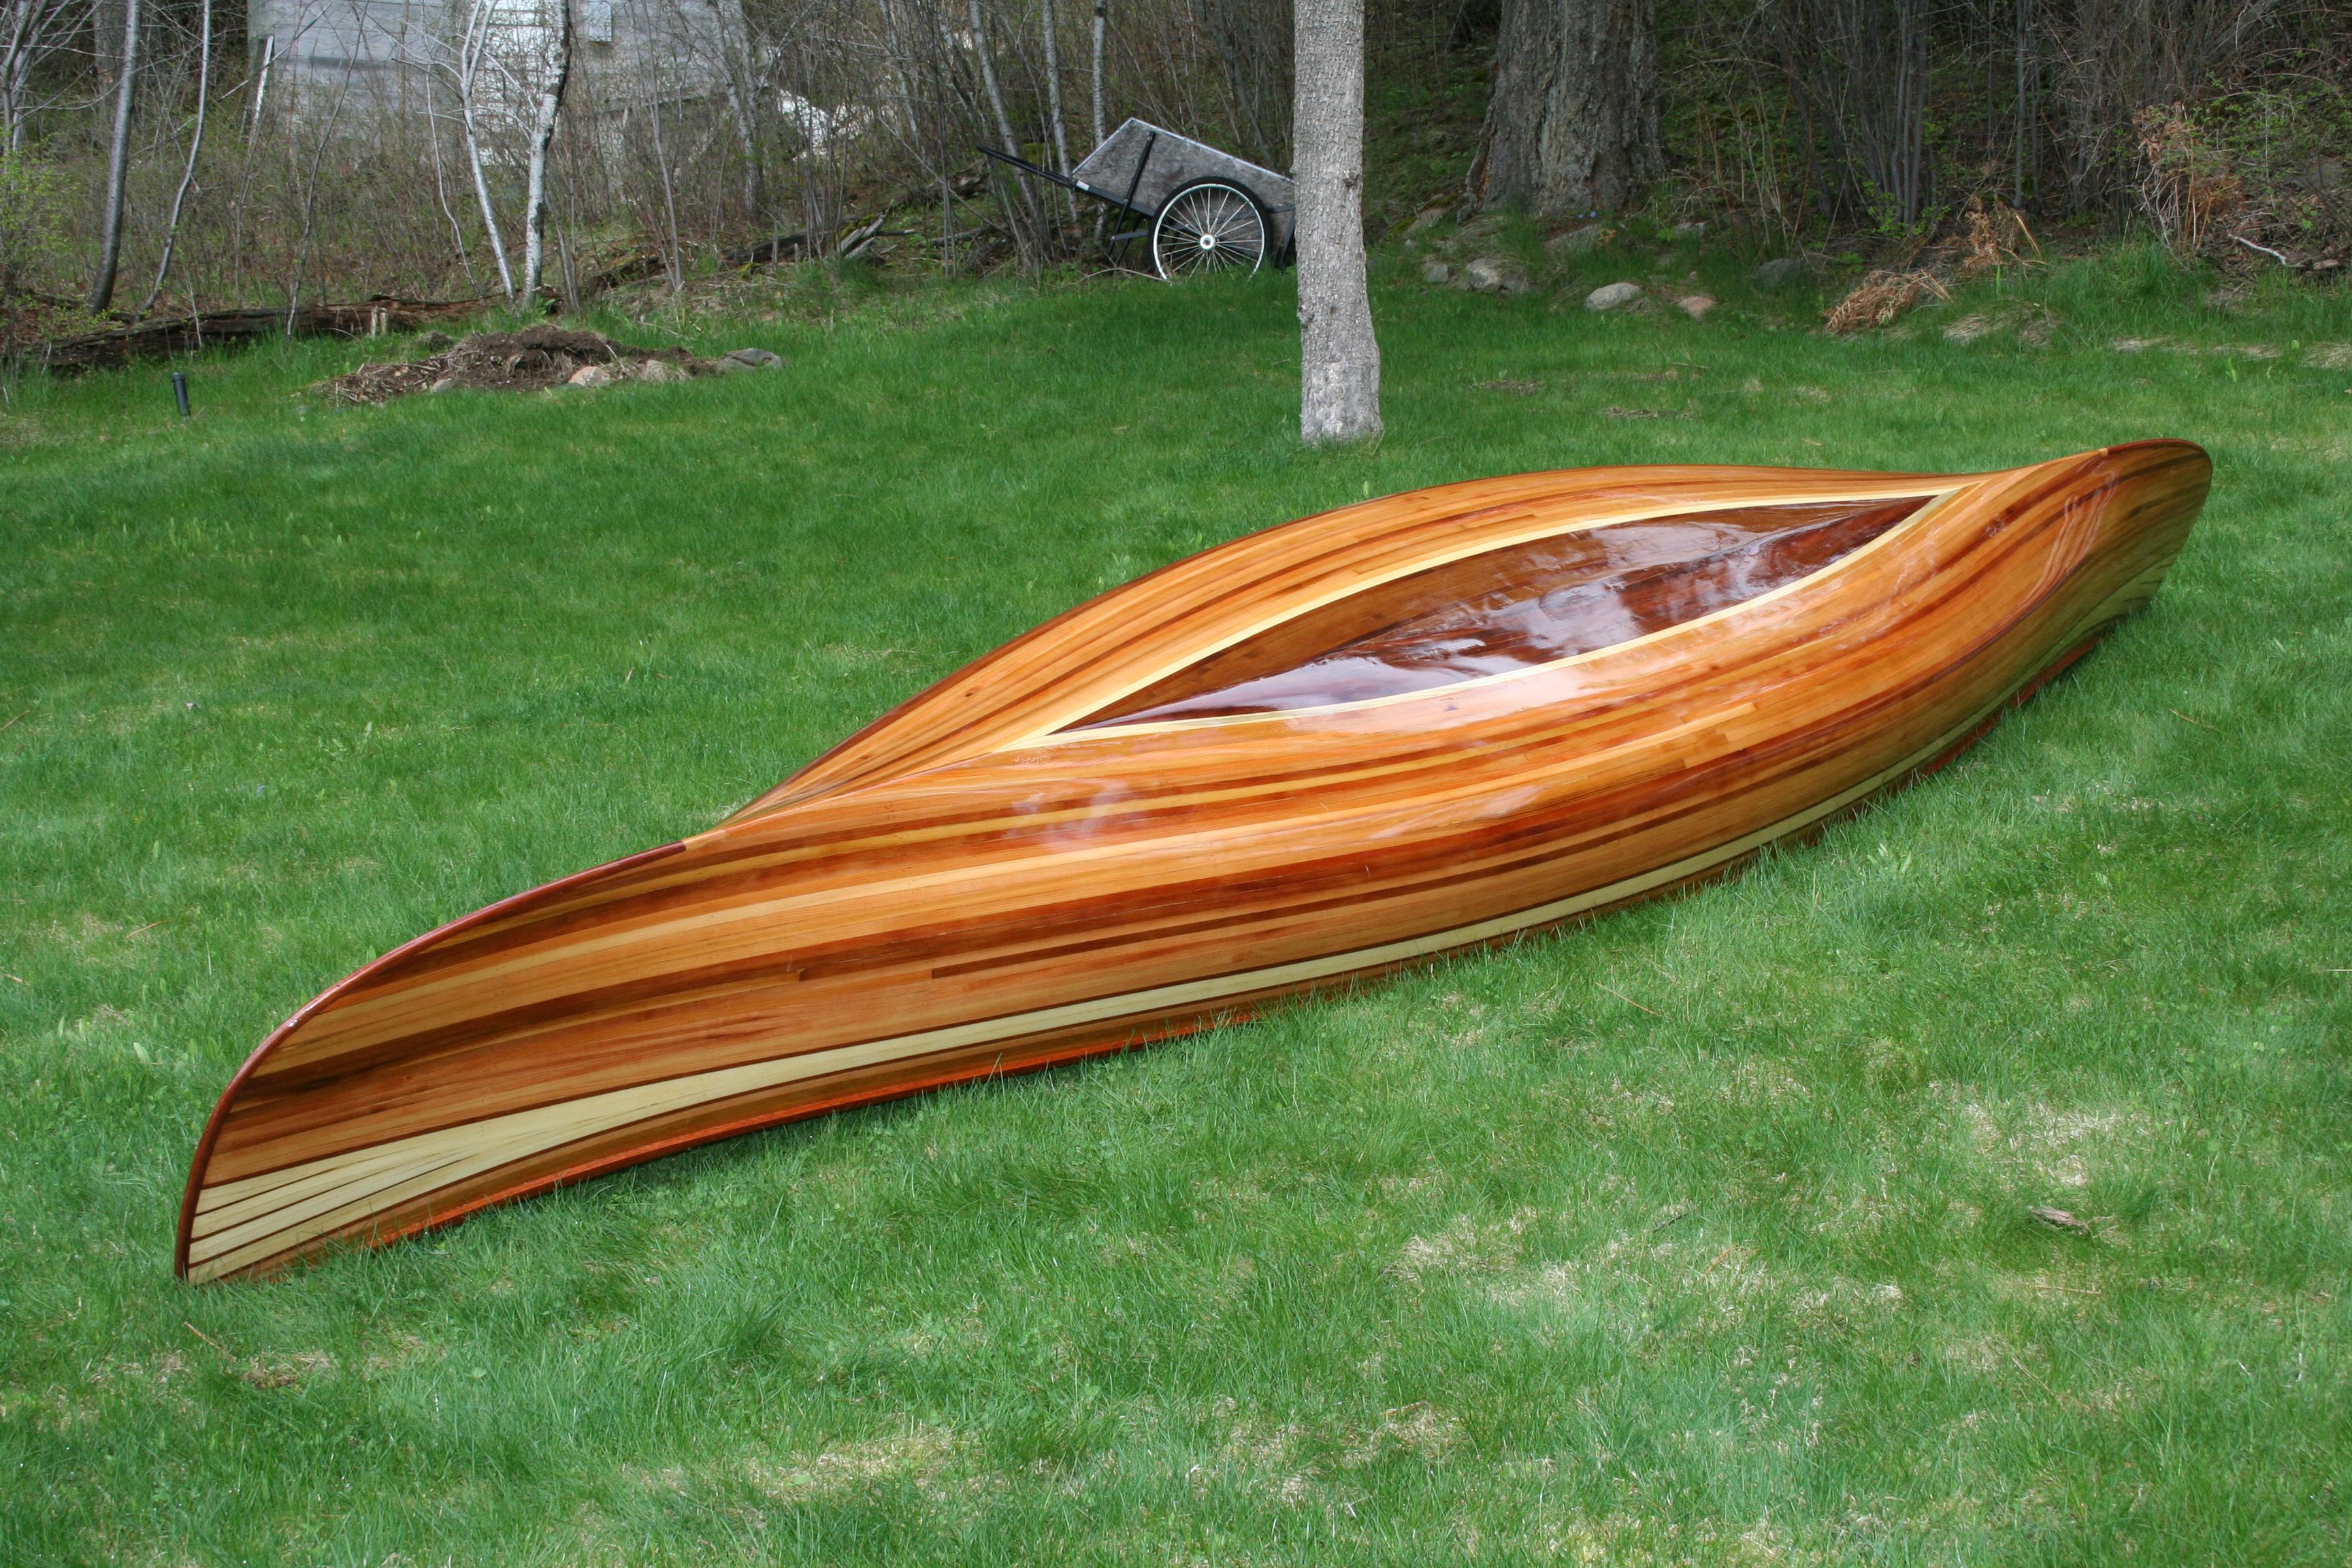 woodwork woodstrip kayak plans pdf plans